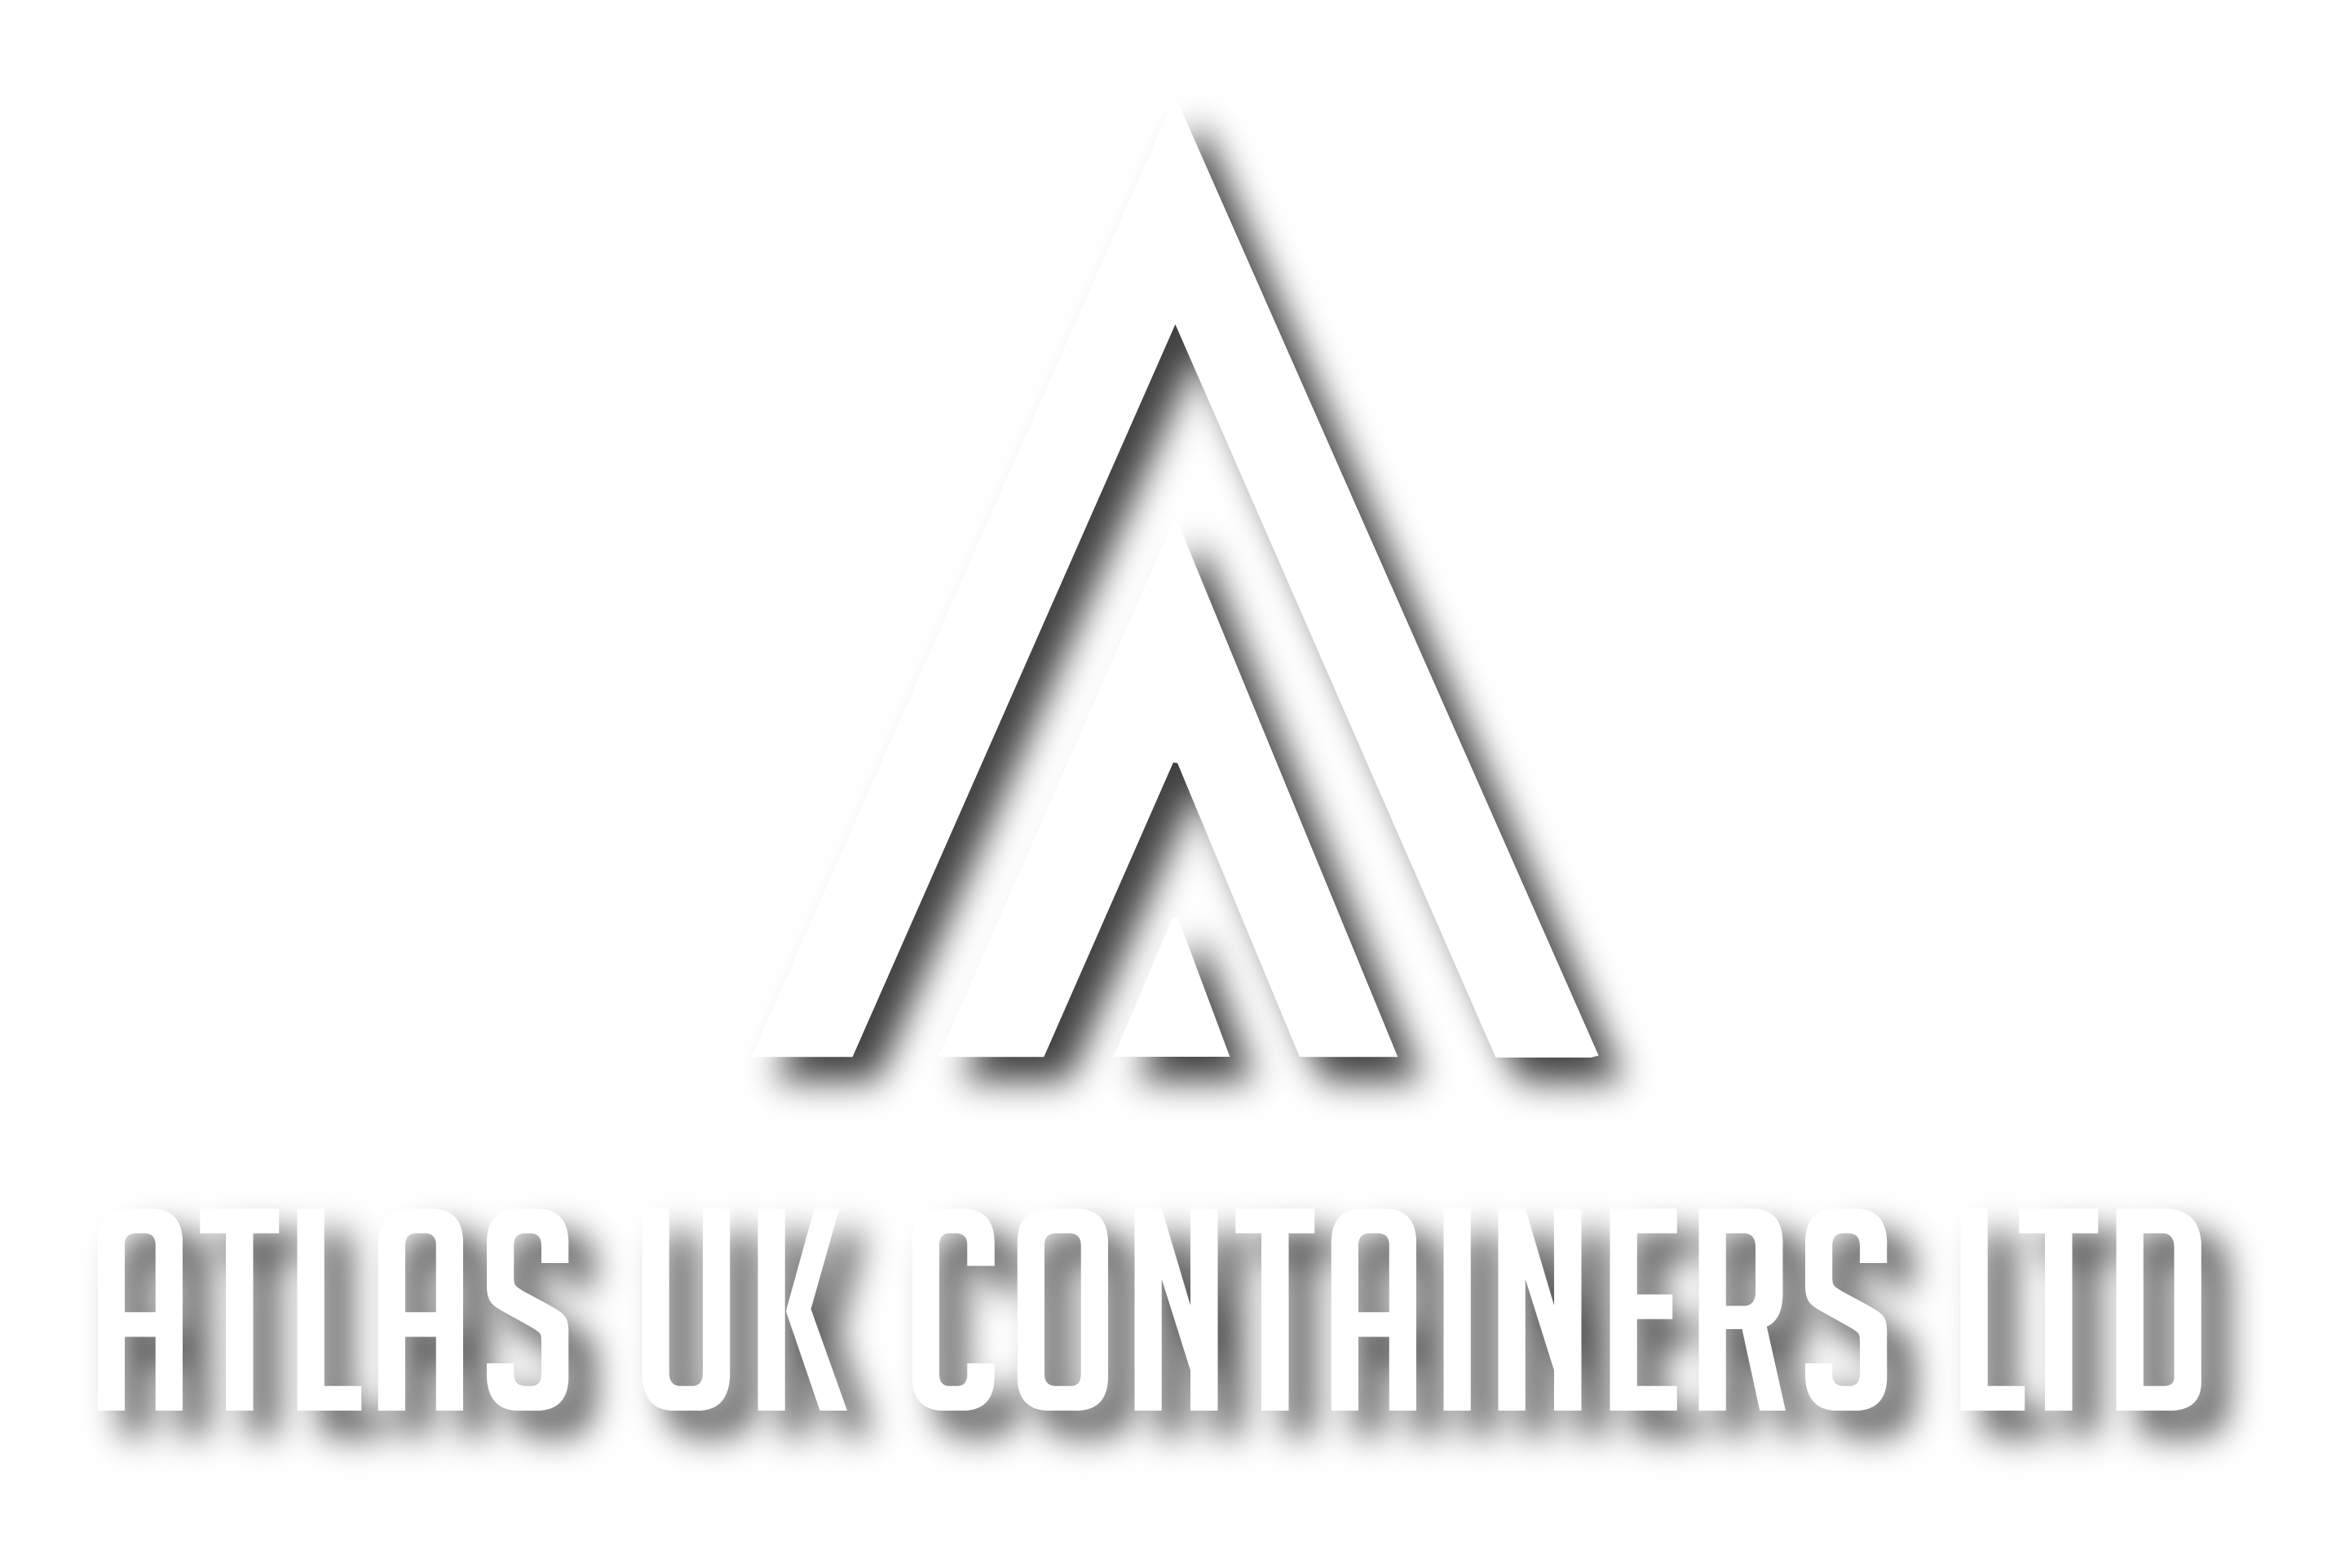 ATLAS UK CONTAINERS LTD